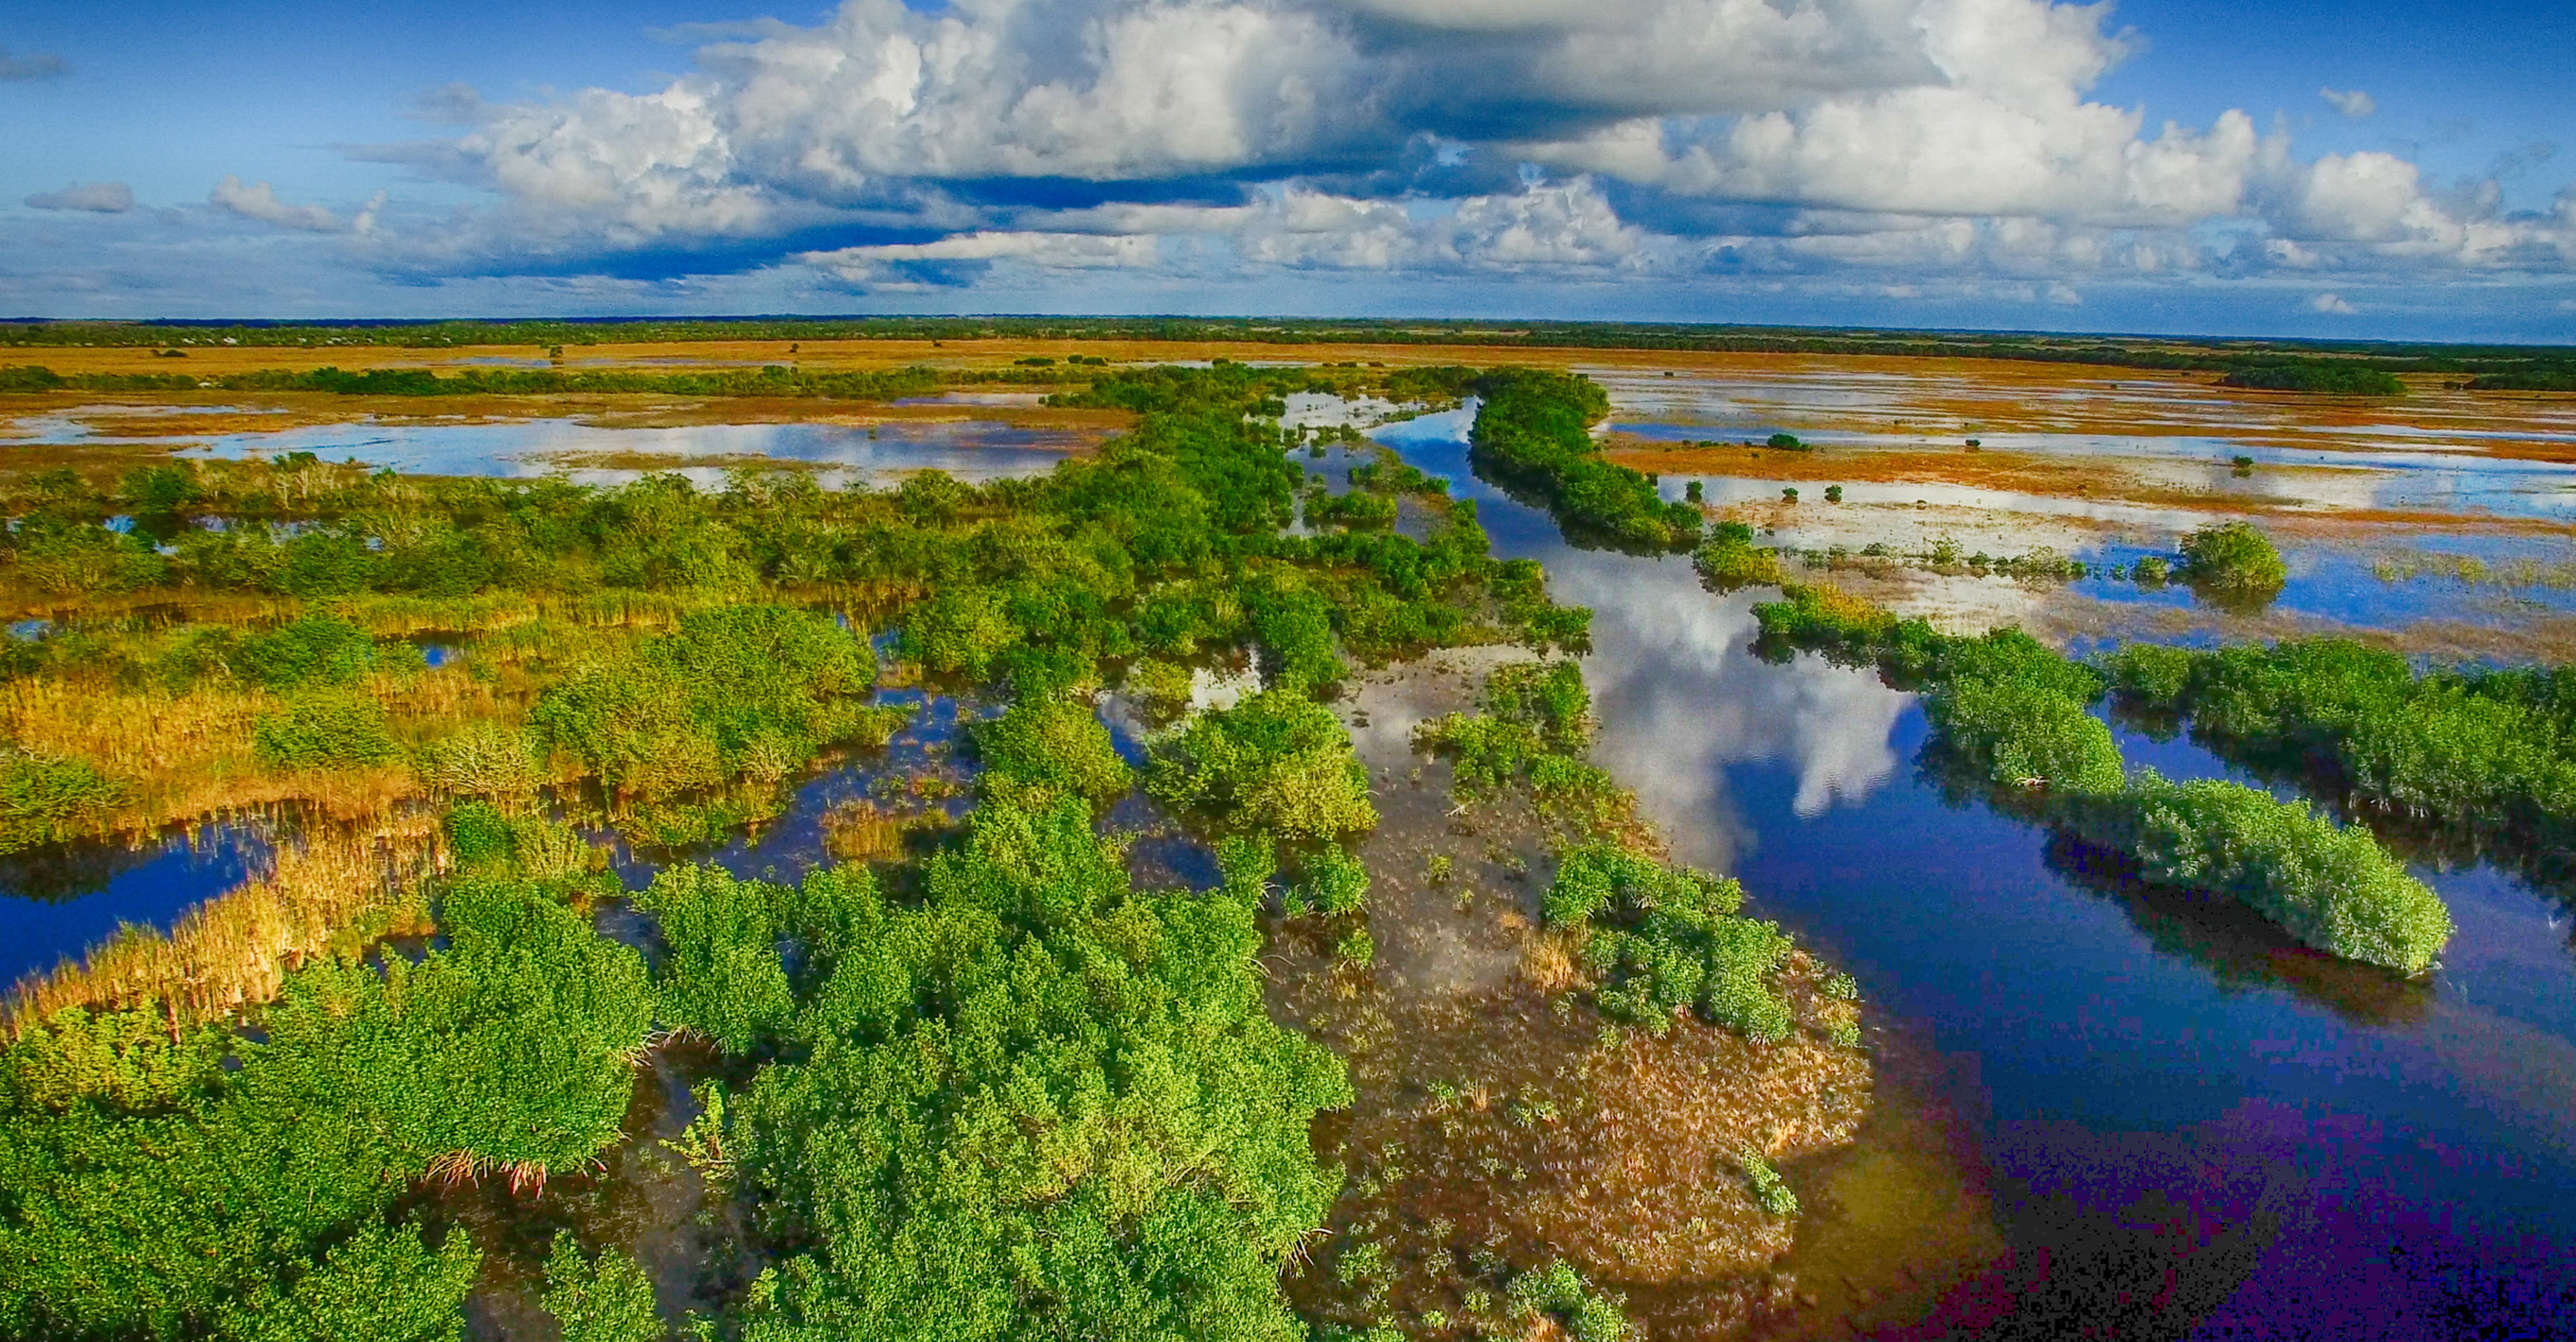 Landscape of the Everglades National Park, Florida, United States